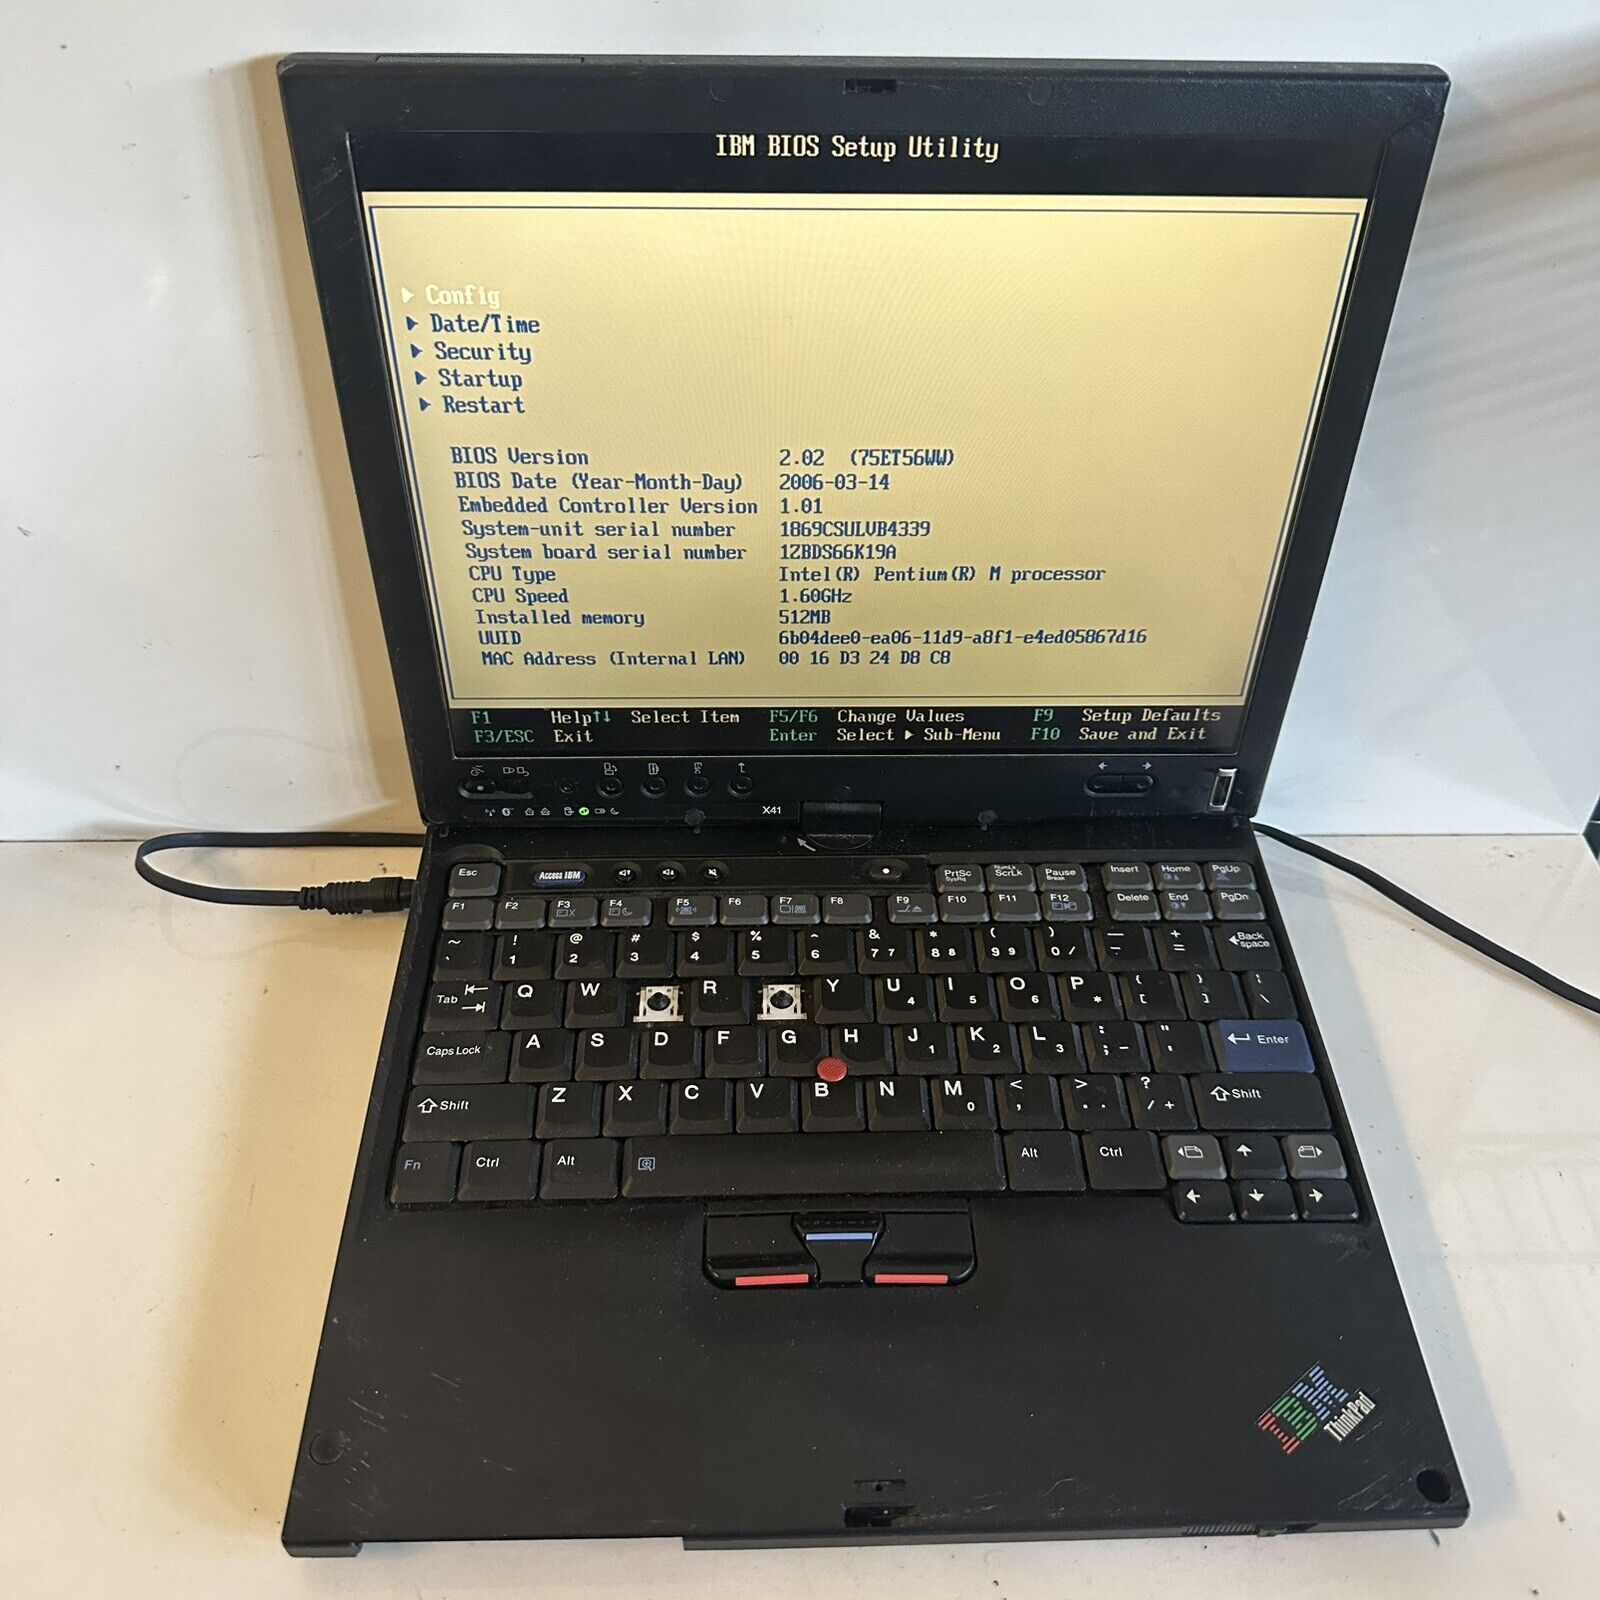 12.1” IBM ThinkPad X41 Tablet Laptop Intel Pentium M 1.60GHz 512MB RAM